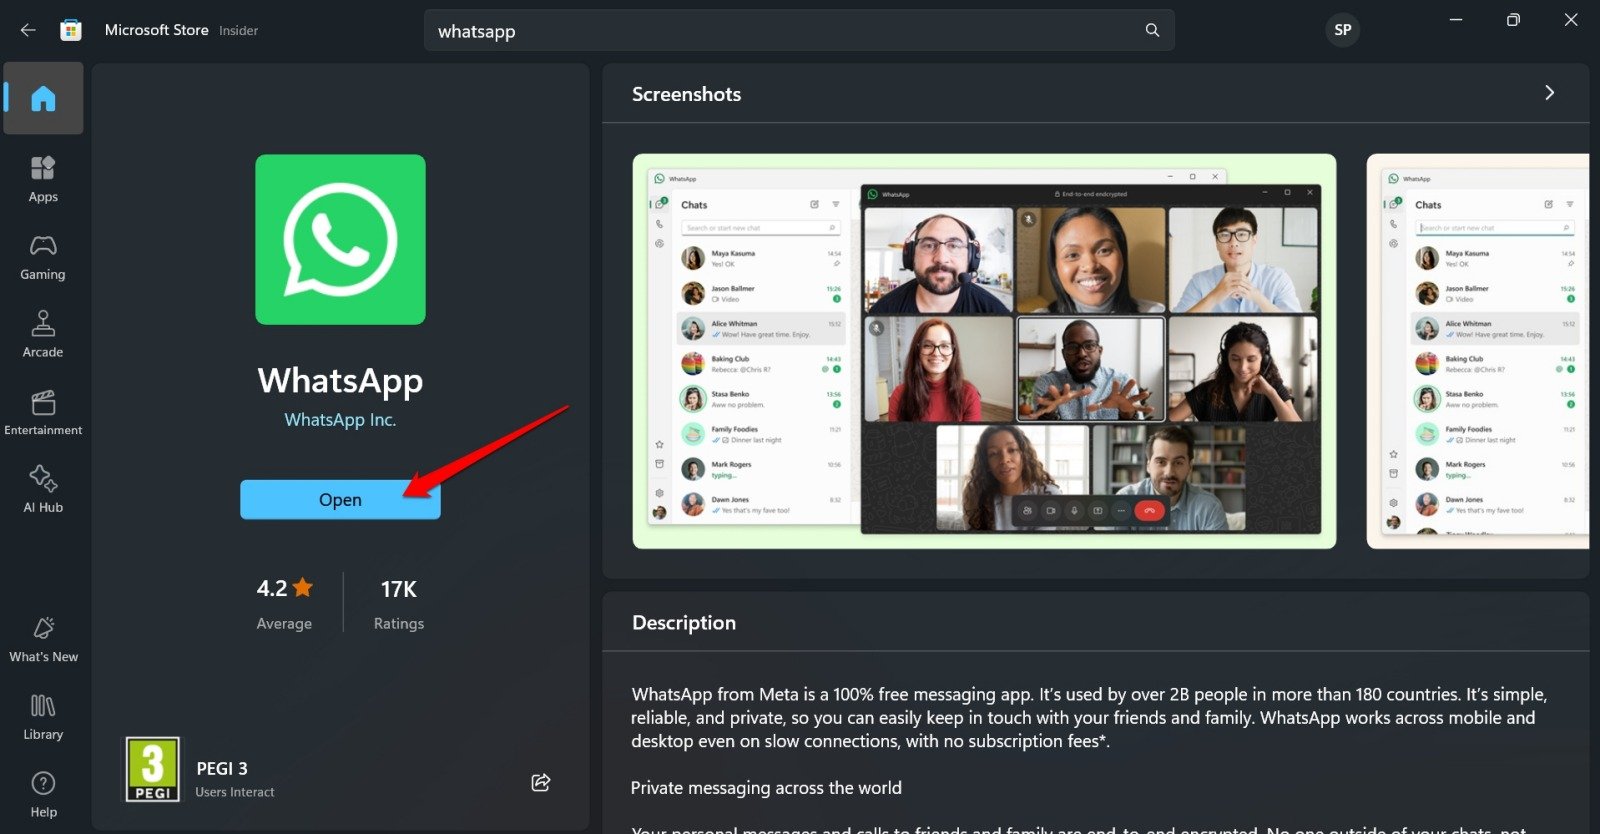 install WhatsApp desktop app from Microsoft Store